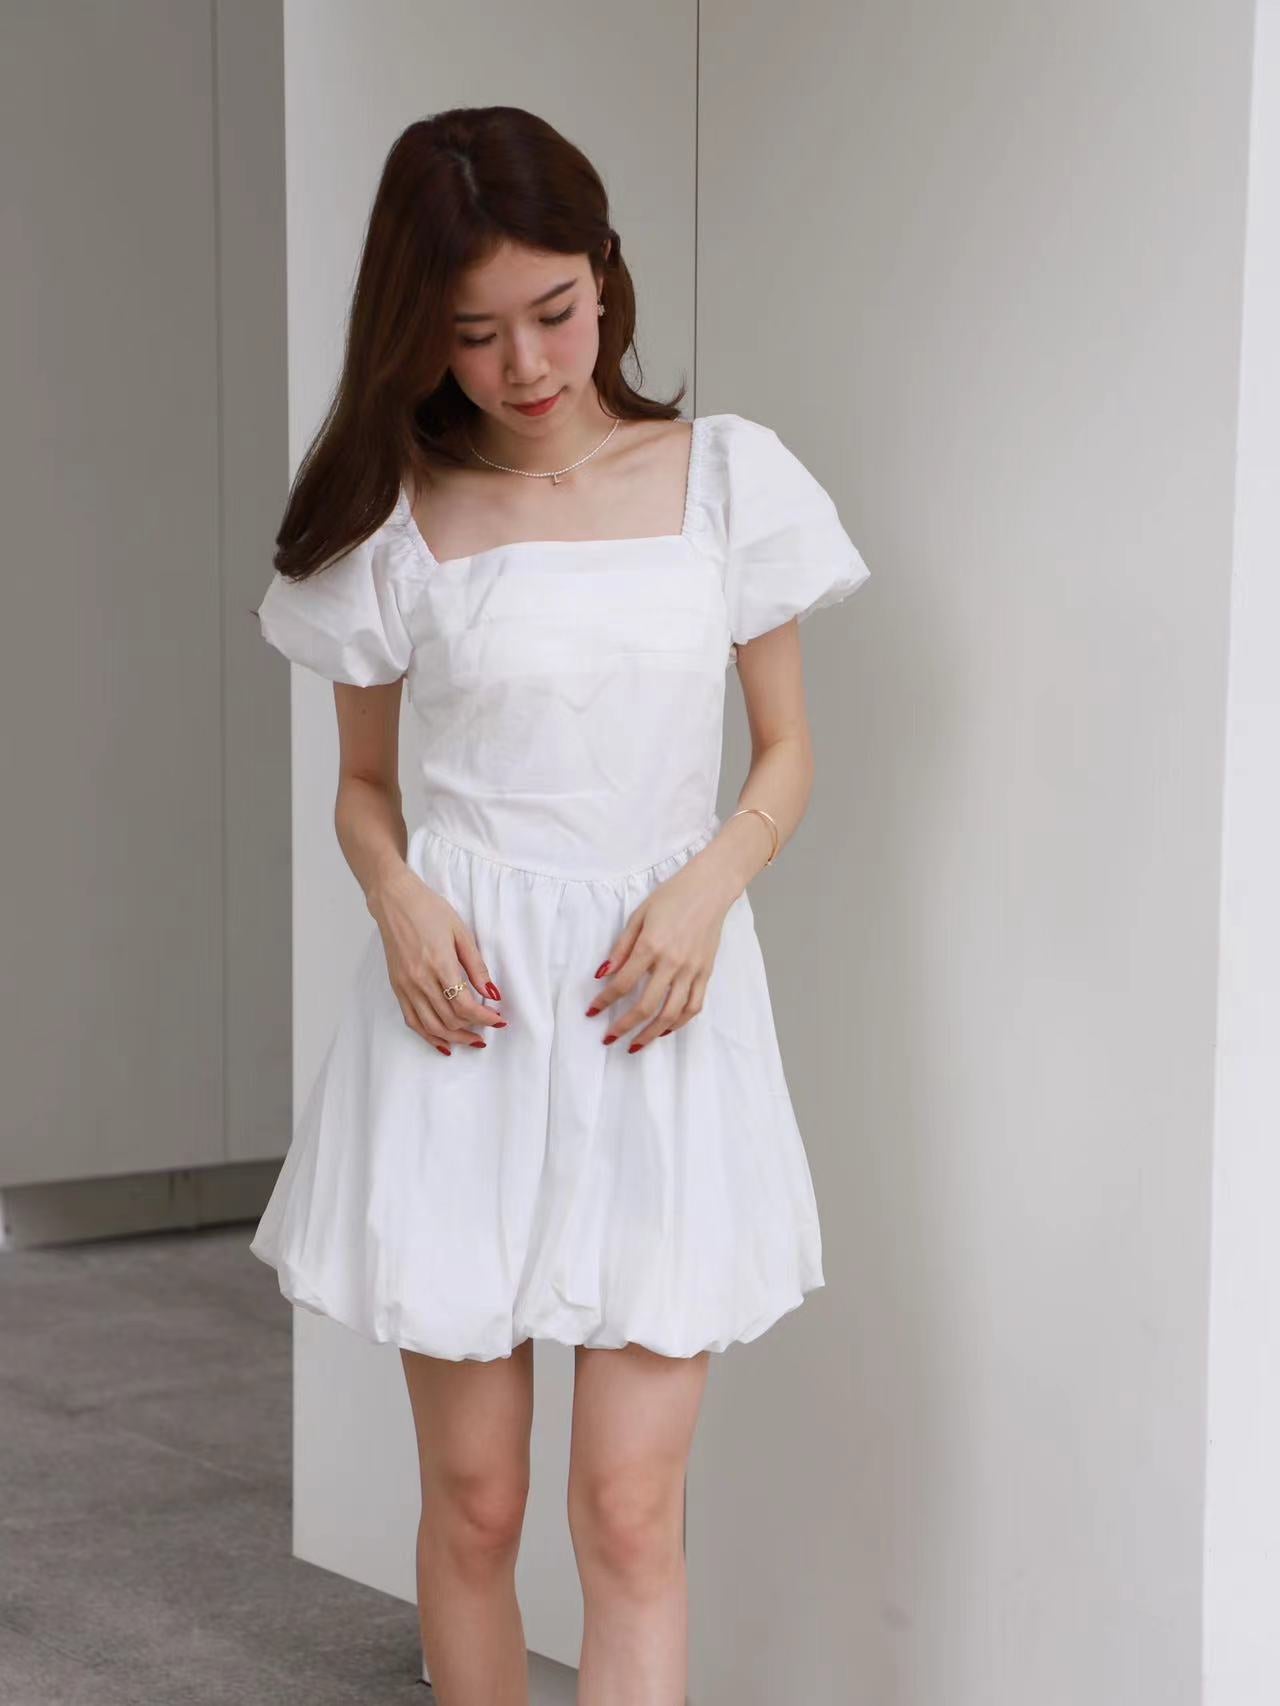 Puffy Pop White Mini Dress